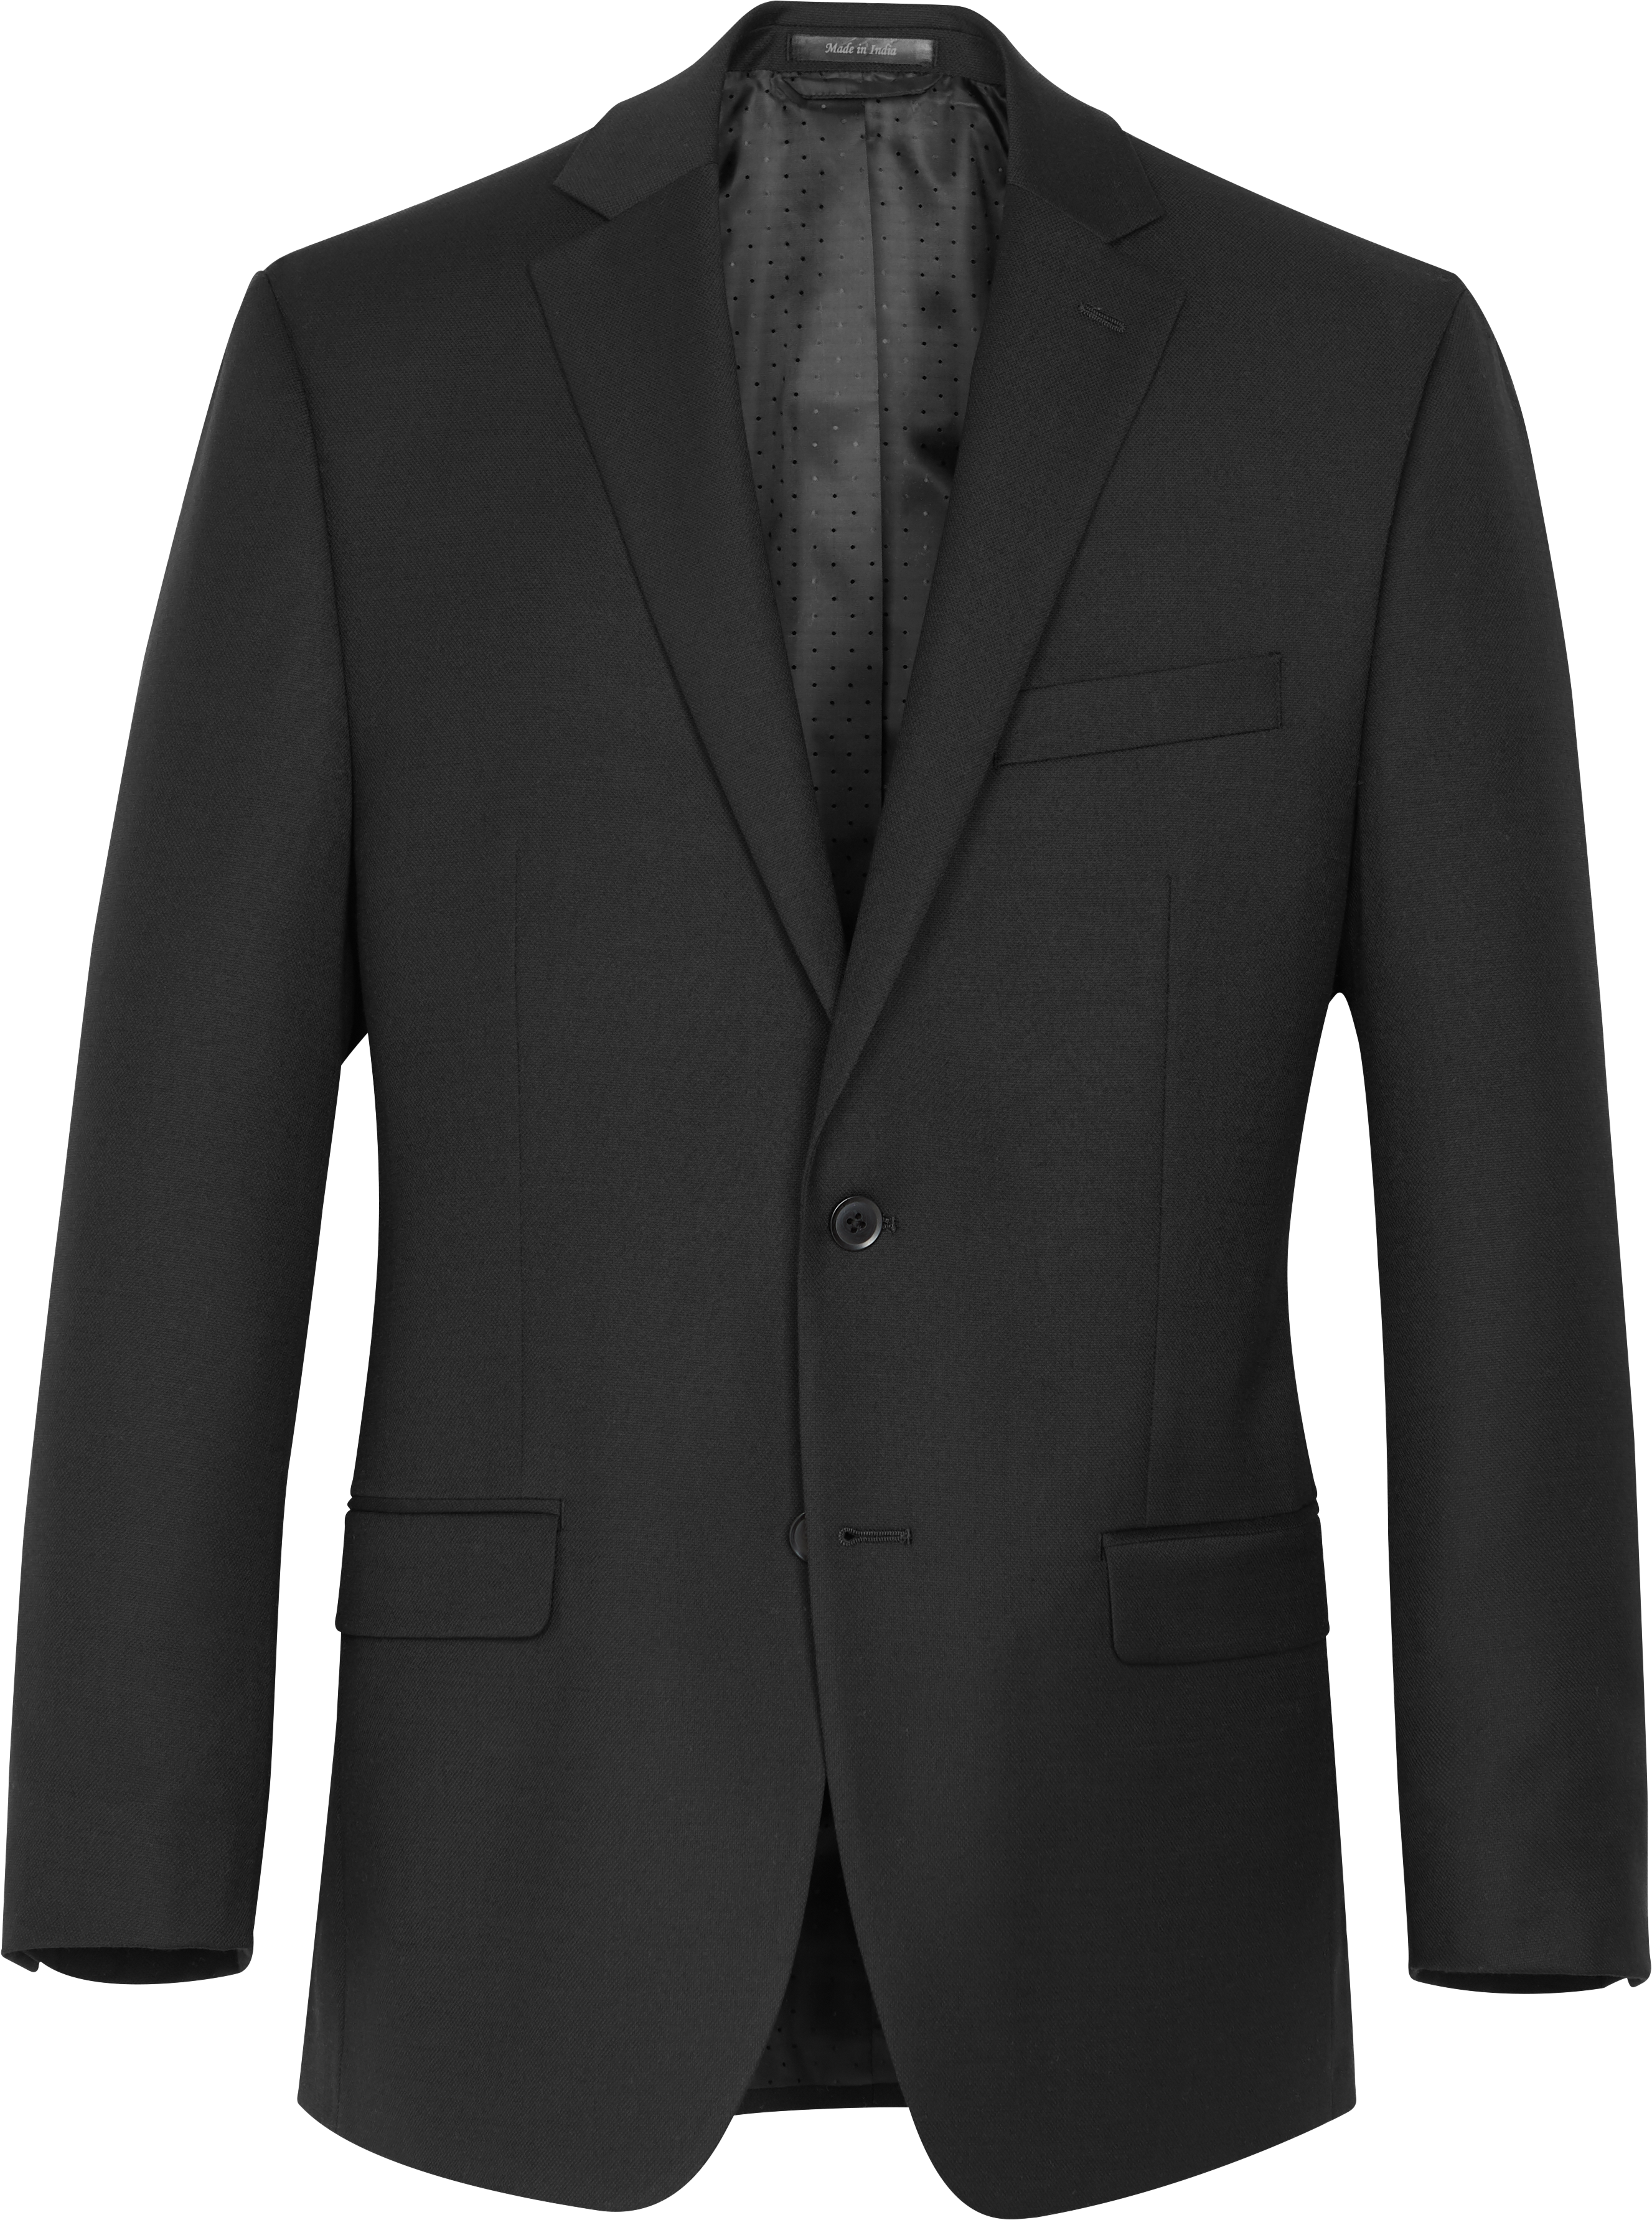 Collection by Michael Strahan Black Classic Fit Suit - Men's Suits ...